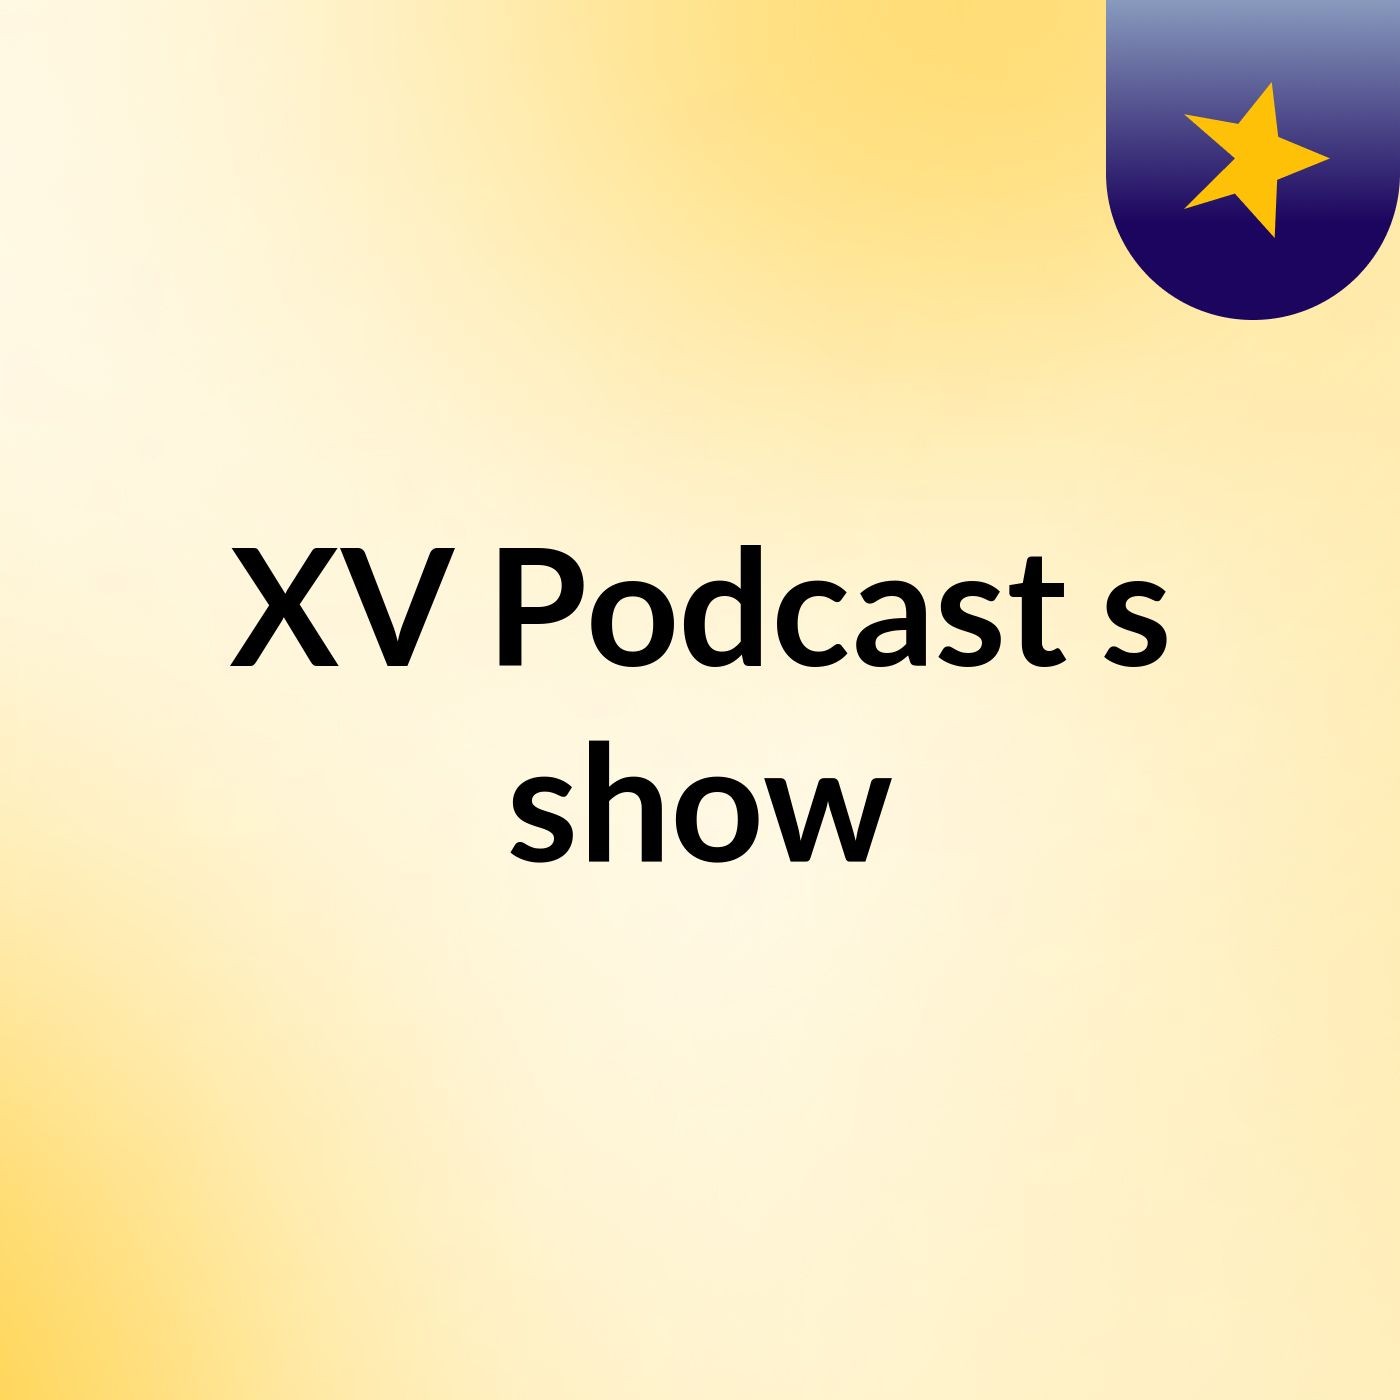 XV Podcast's show